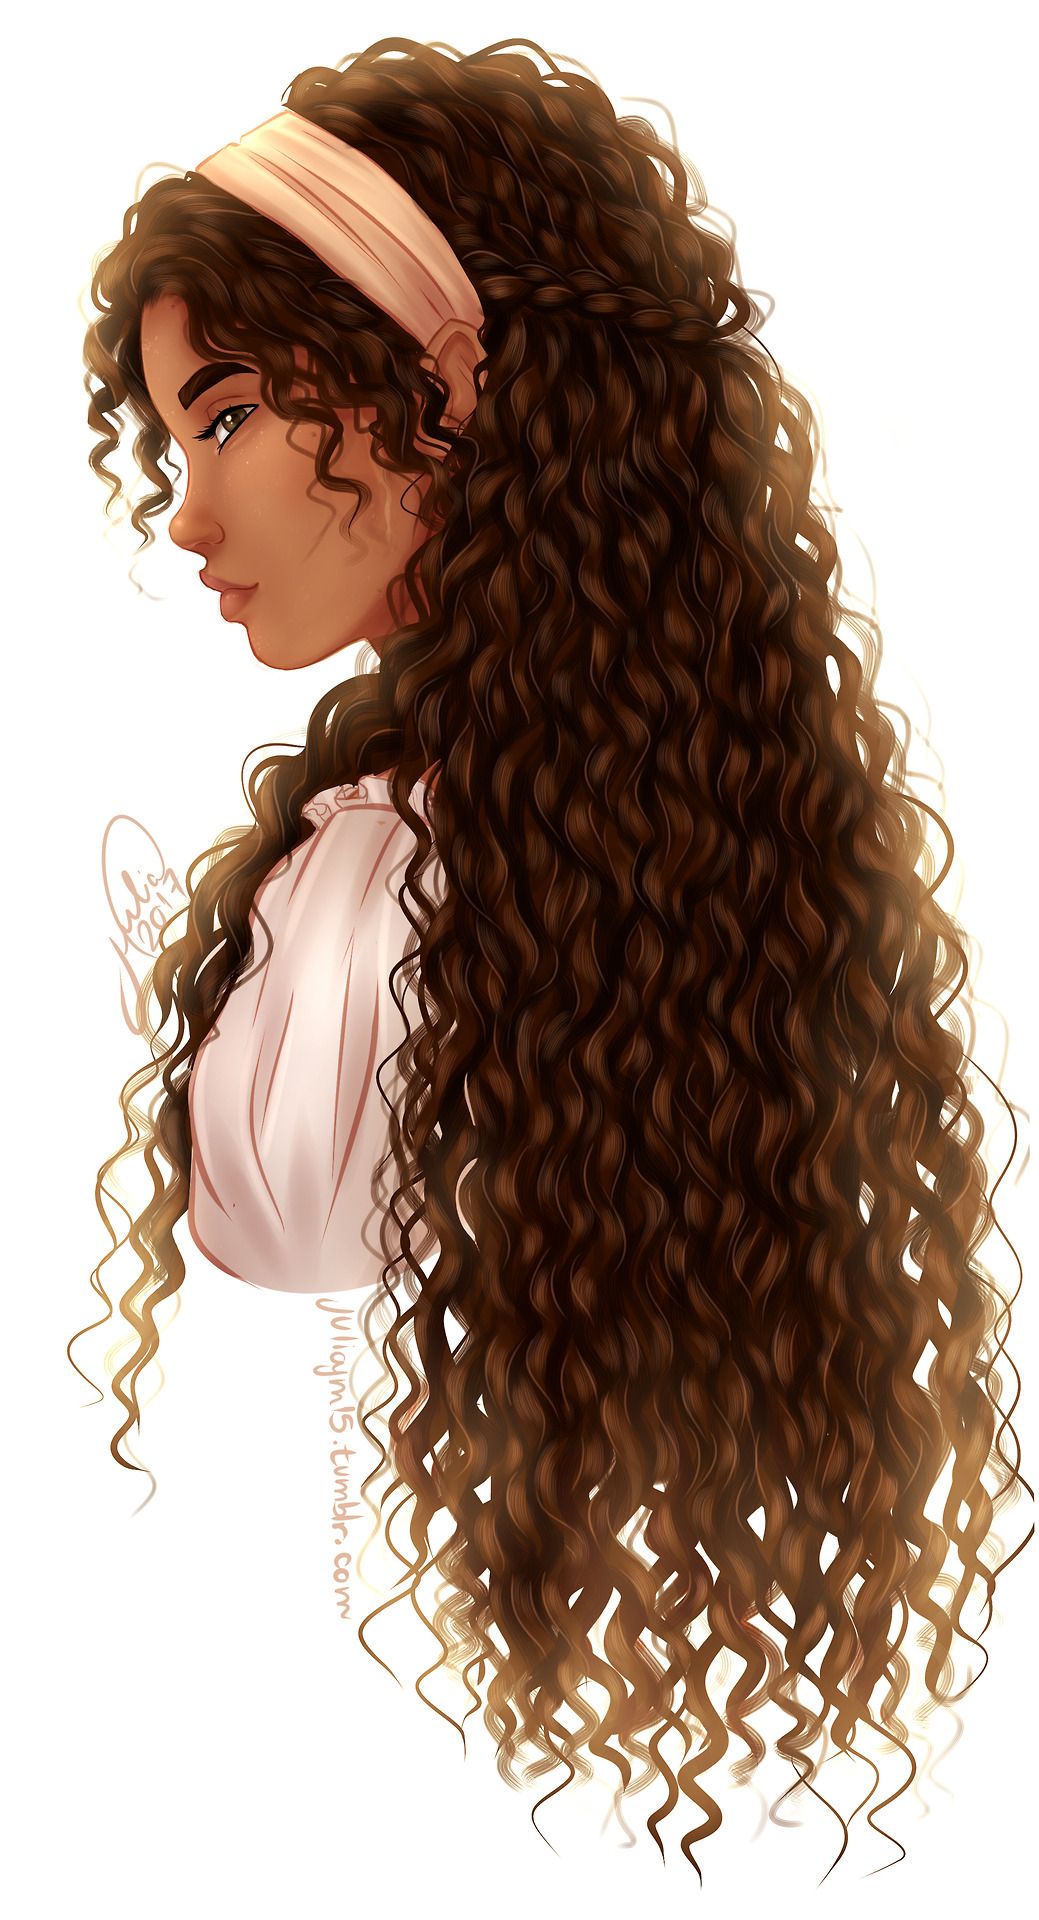 Anime Girl With Brown Hair Tumblr